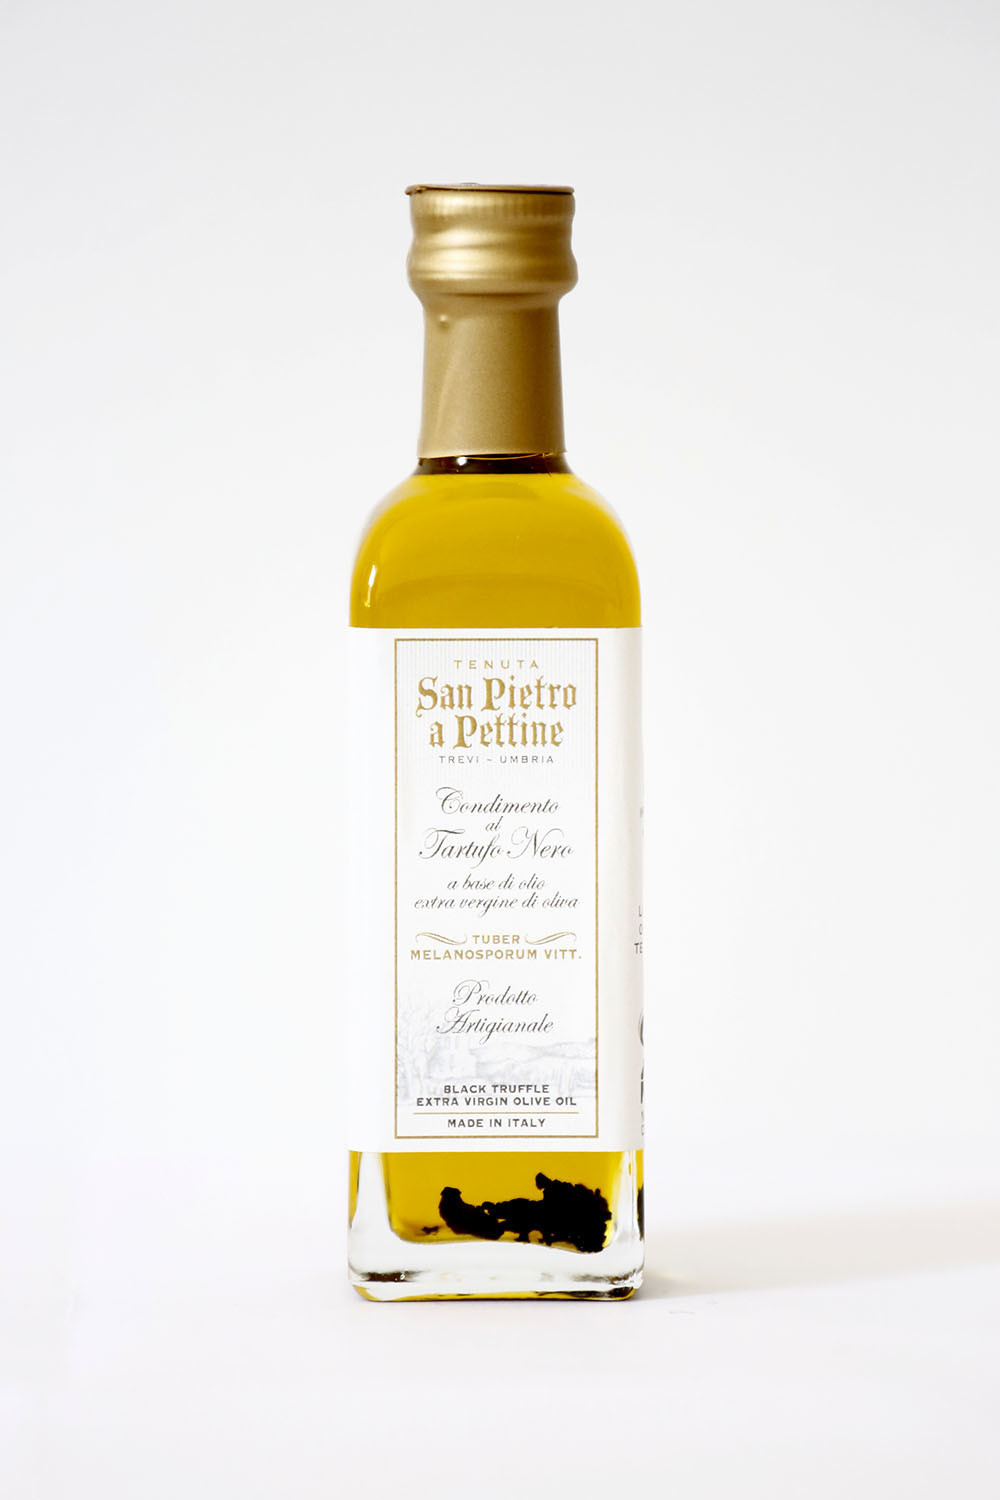 San Pietro a Pettine "San Pietro a Pettine" Pregiato Black Winter Truffle Extra Virgin Olive Oil 24/55ml